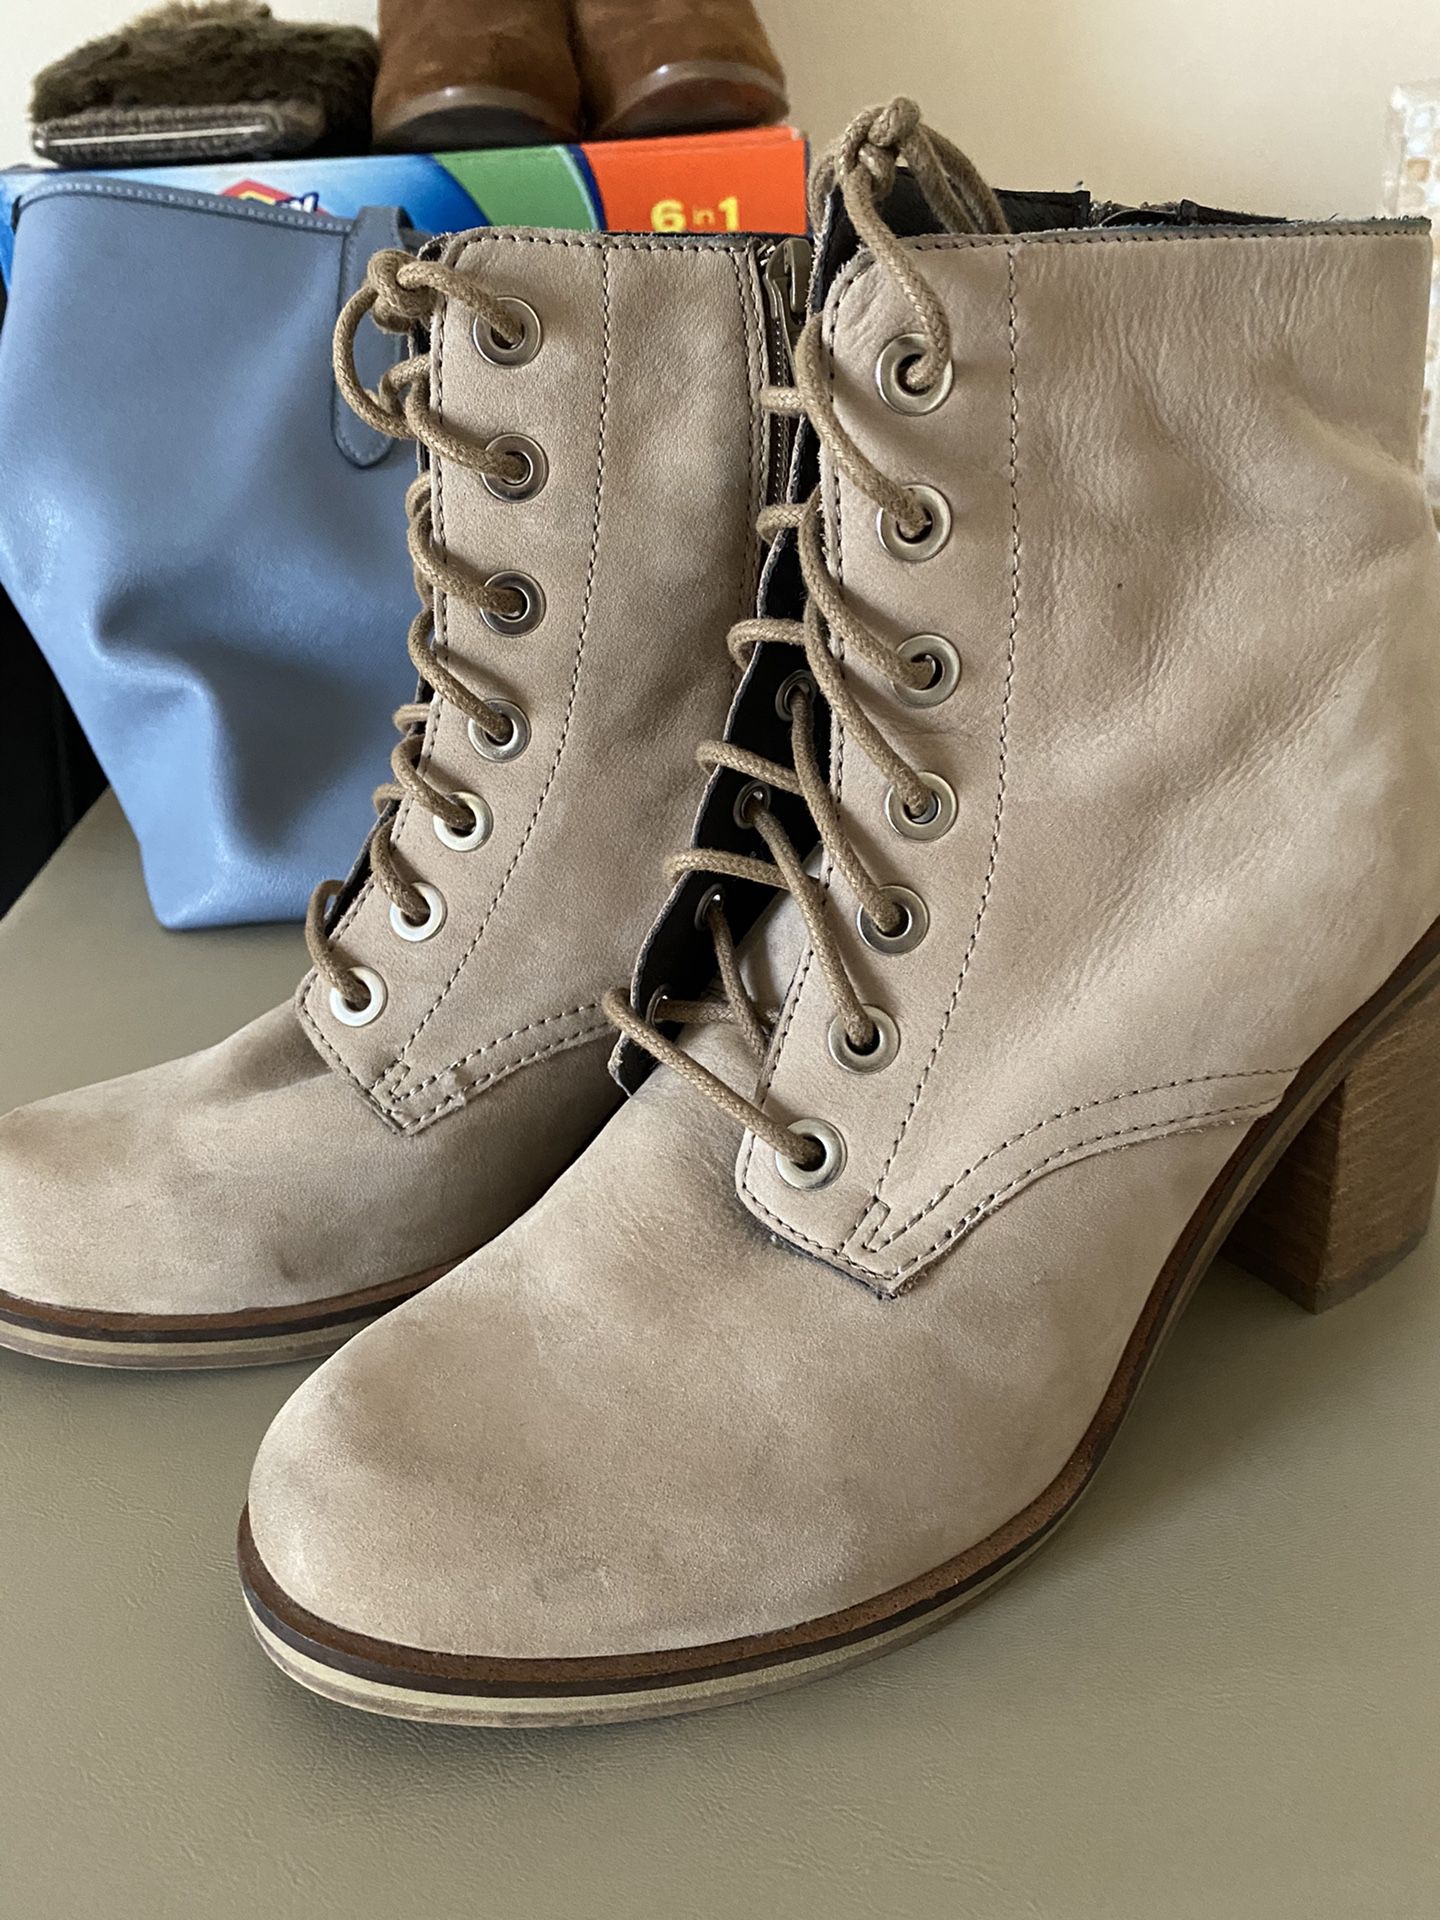 Women’s Boots - Aldo - Size 10